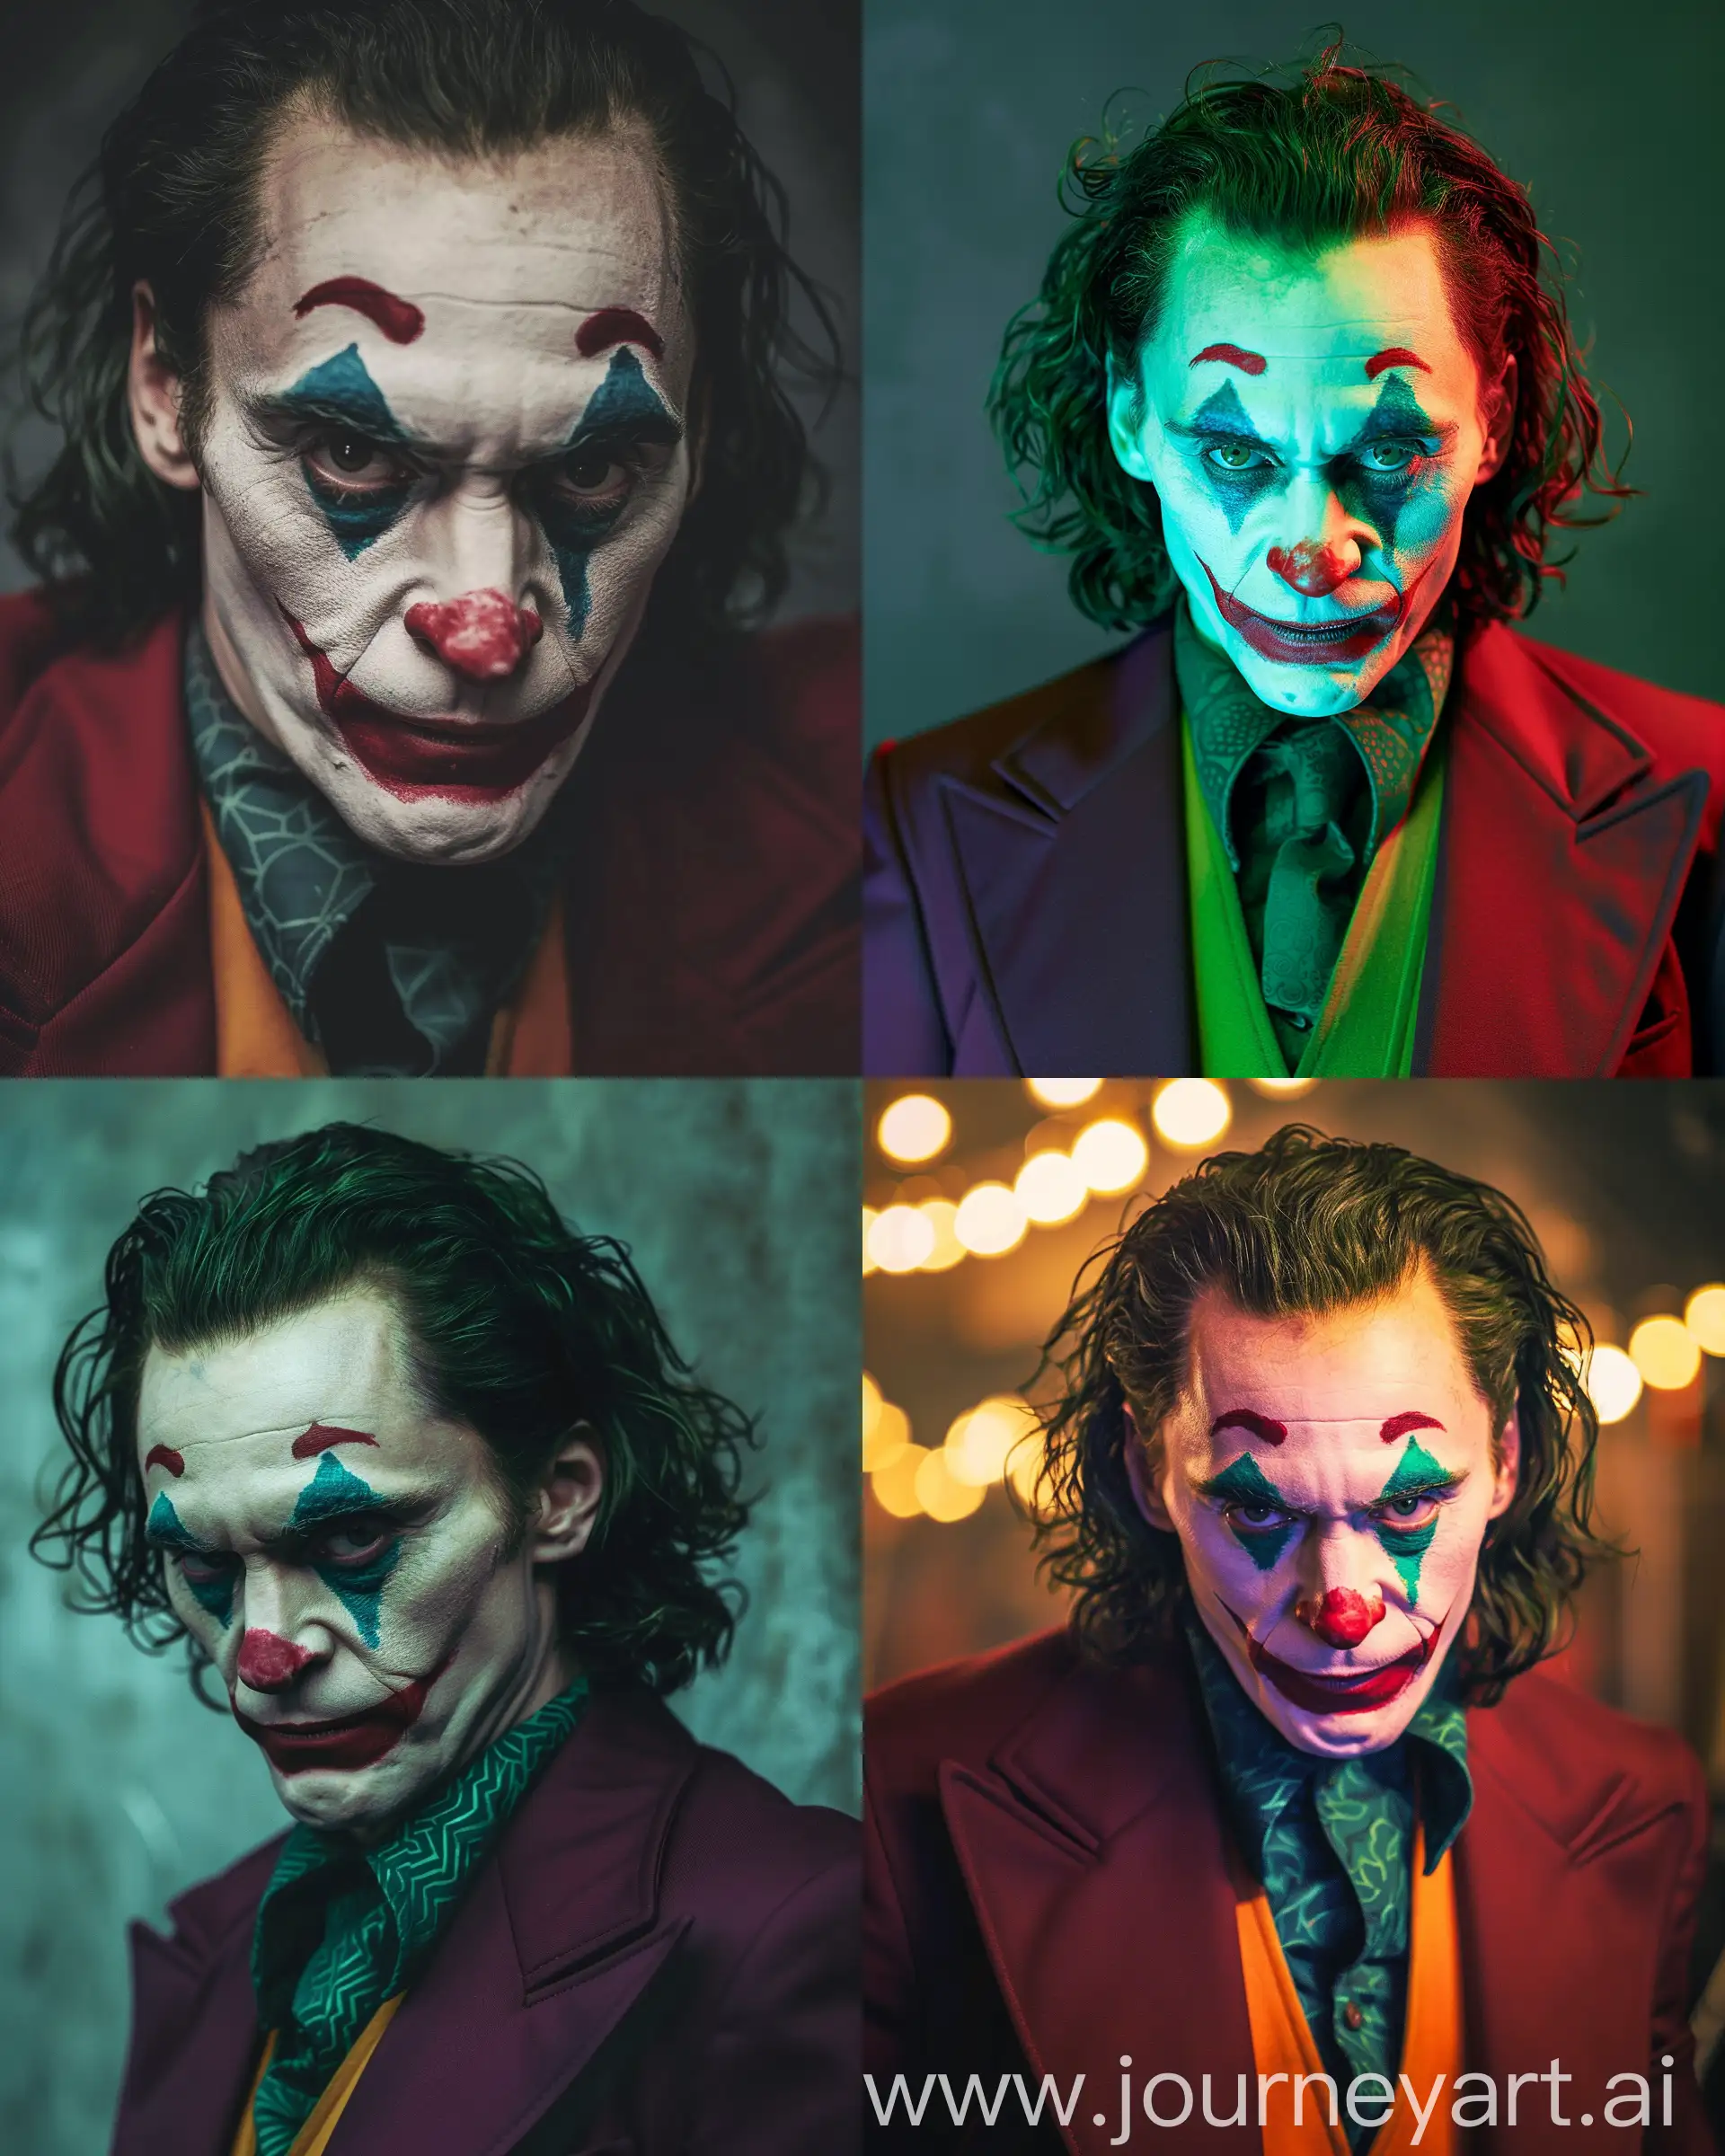 Tom-Hiddleston-Portrays-Intense-Joker-Persona-in-LiveStyle-Fujifilm-Portrait